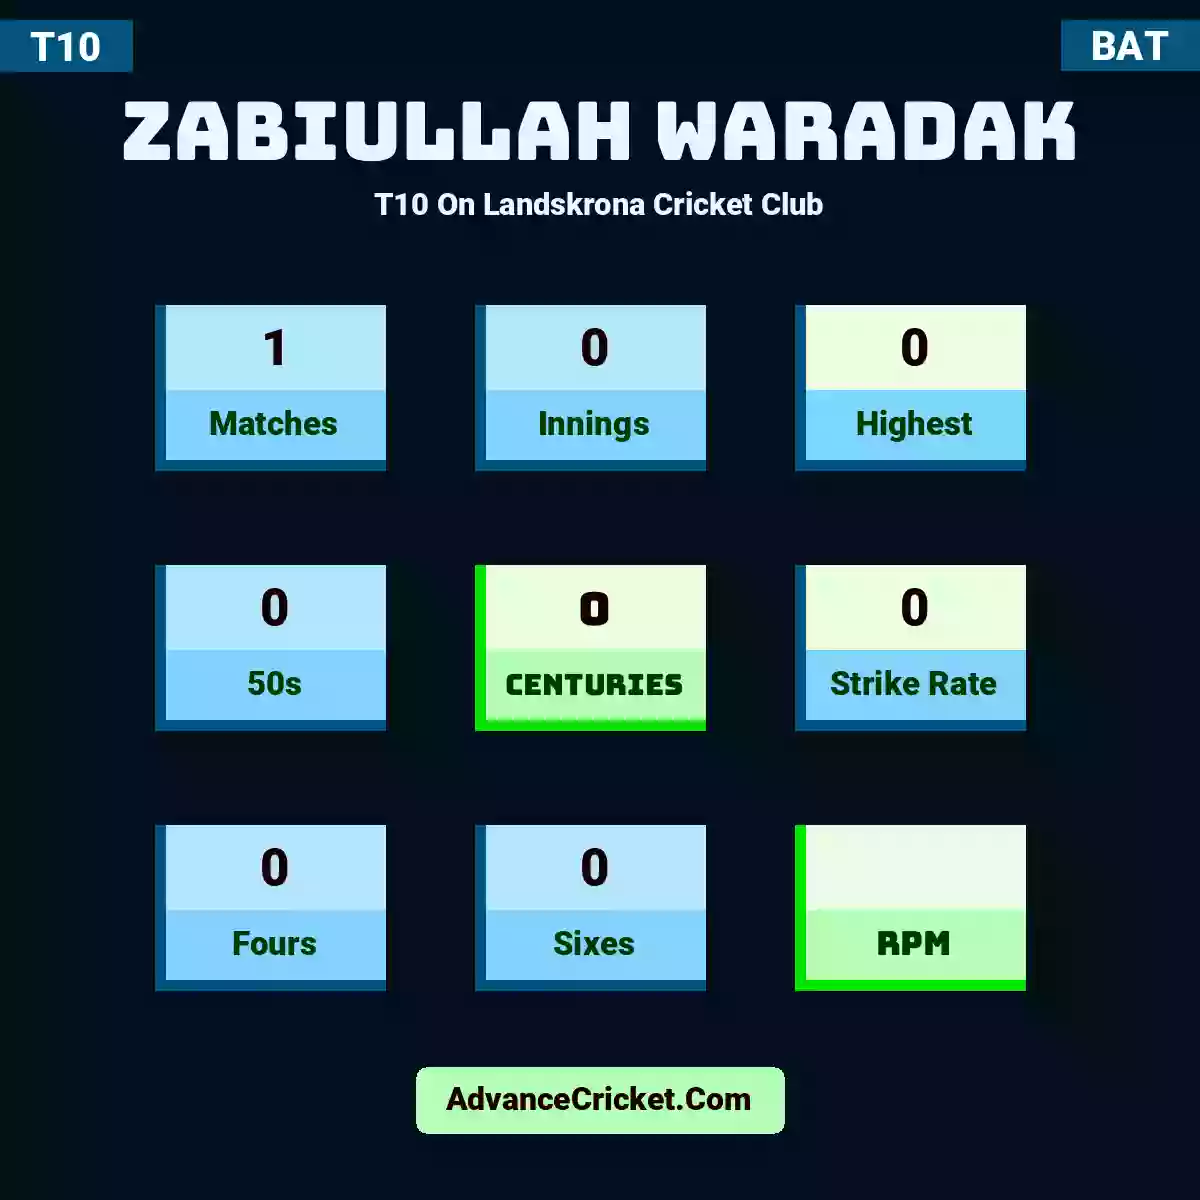 Zabiullah Waradak T10  On Landskrona Cricket Club, Zabiullah Waradak played 1 matches, scored 0 runs as highest, 0 half-centuries, and 0 centuries, with a strike rate of 0. Z.Waradak hit 0 fours and 0 sixes.